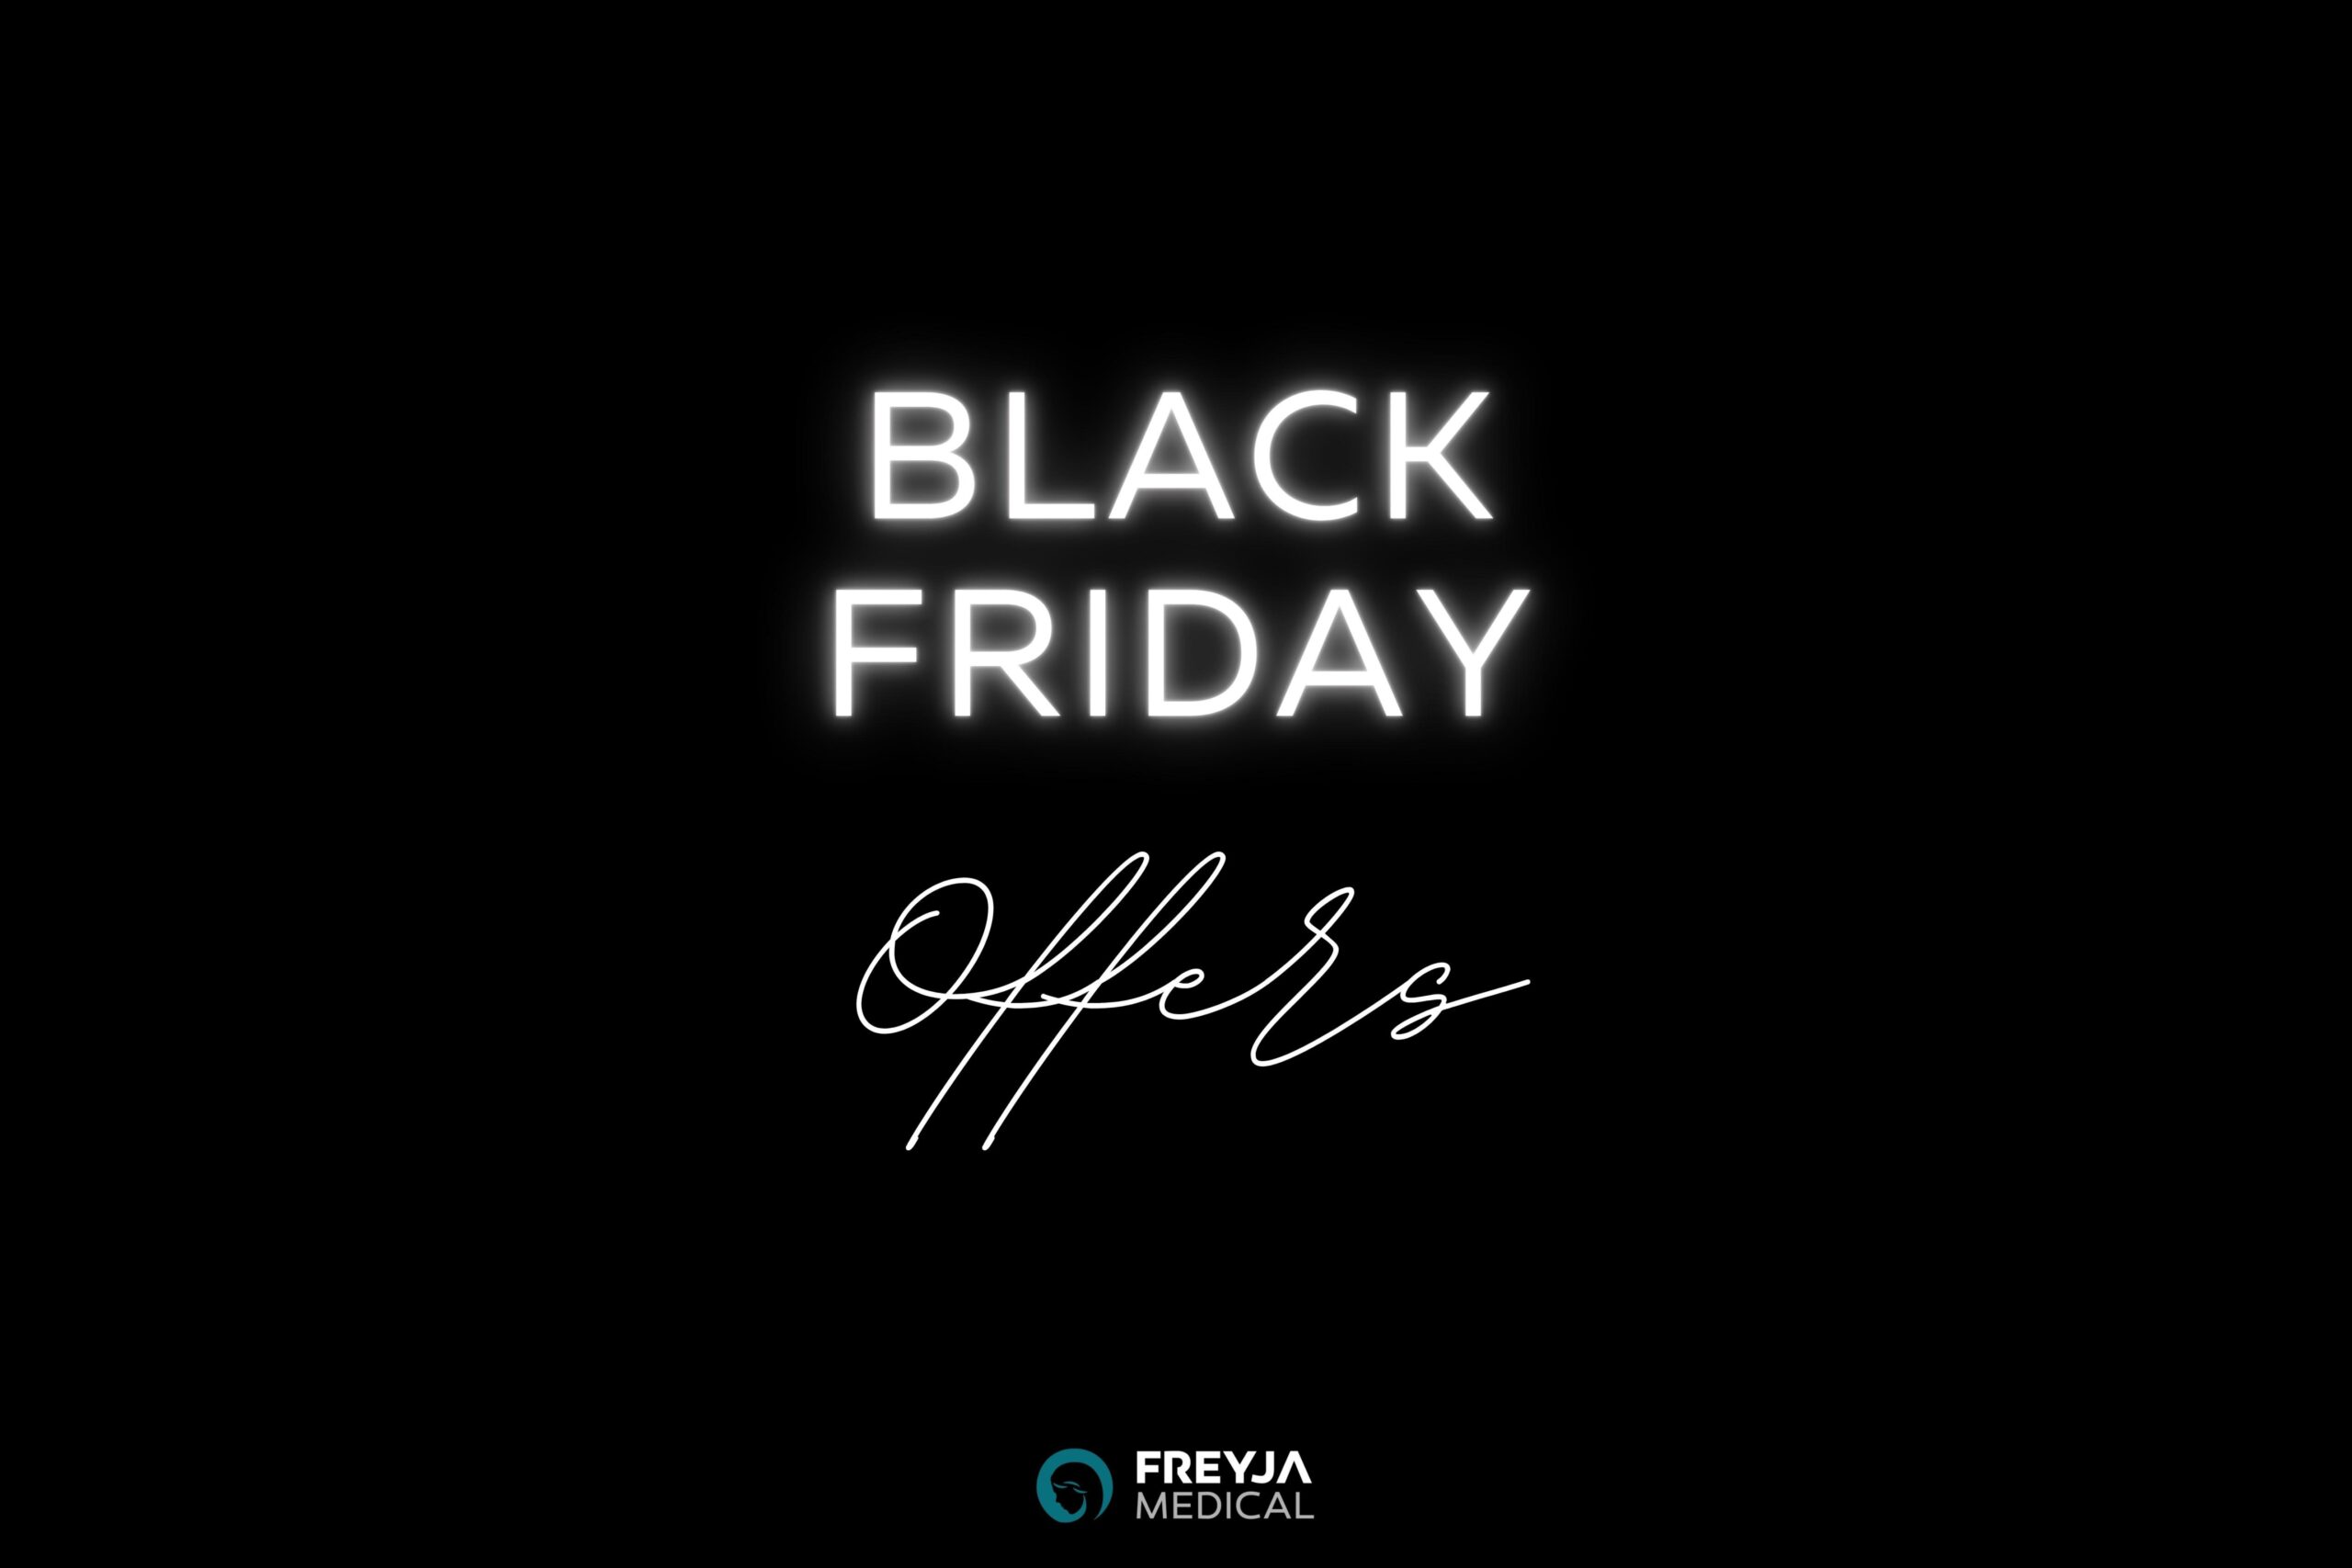 Black Friday at Freyja Medical